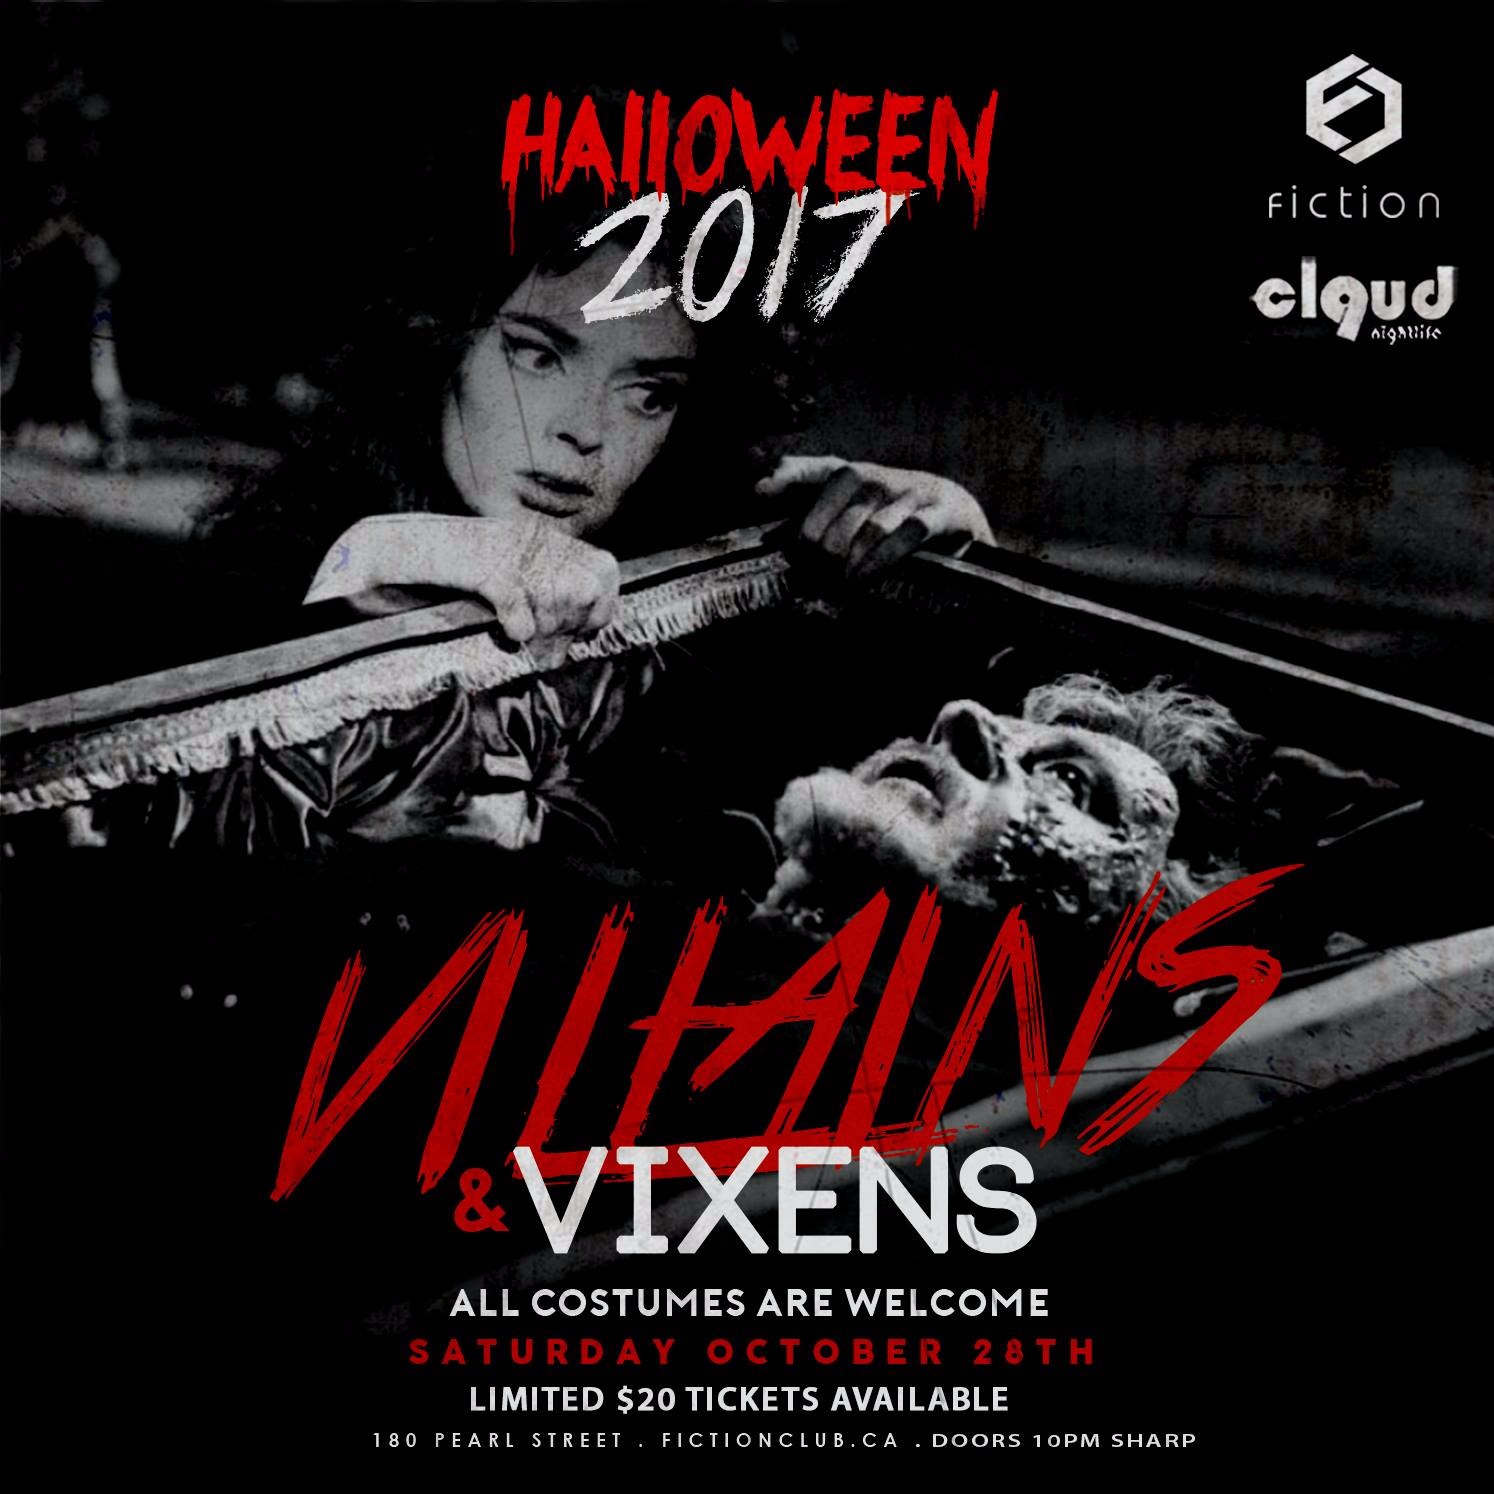 Halloween Sat Oct 28 // Villains & Vixens @ Fiction Club (19+)